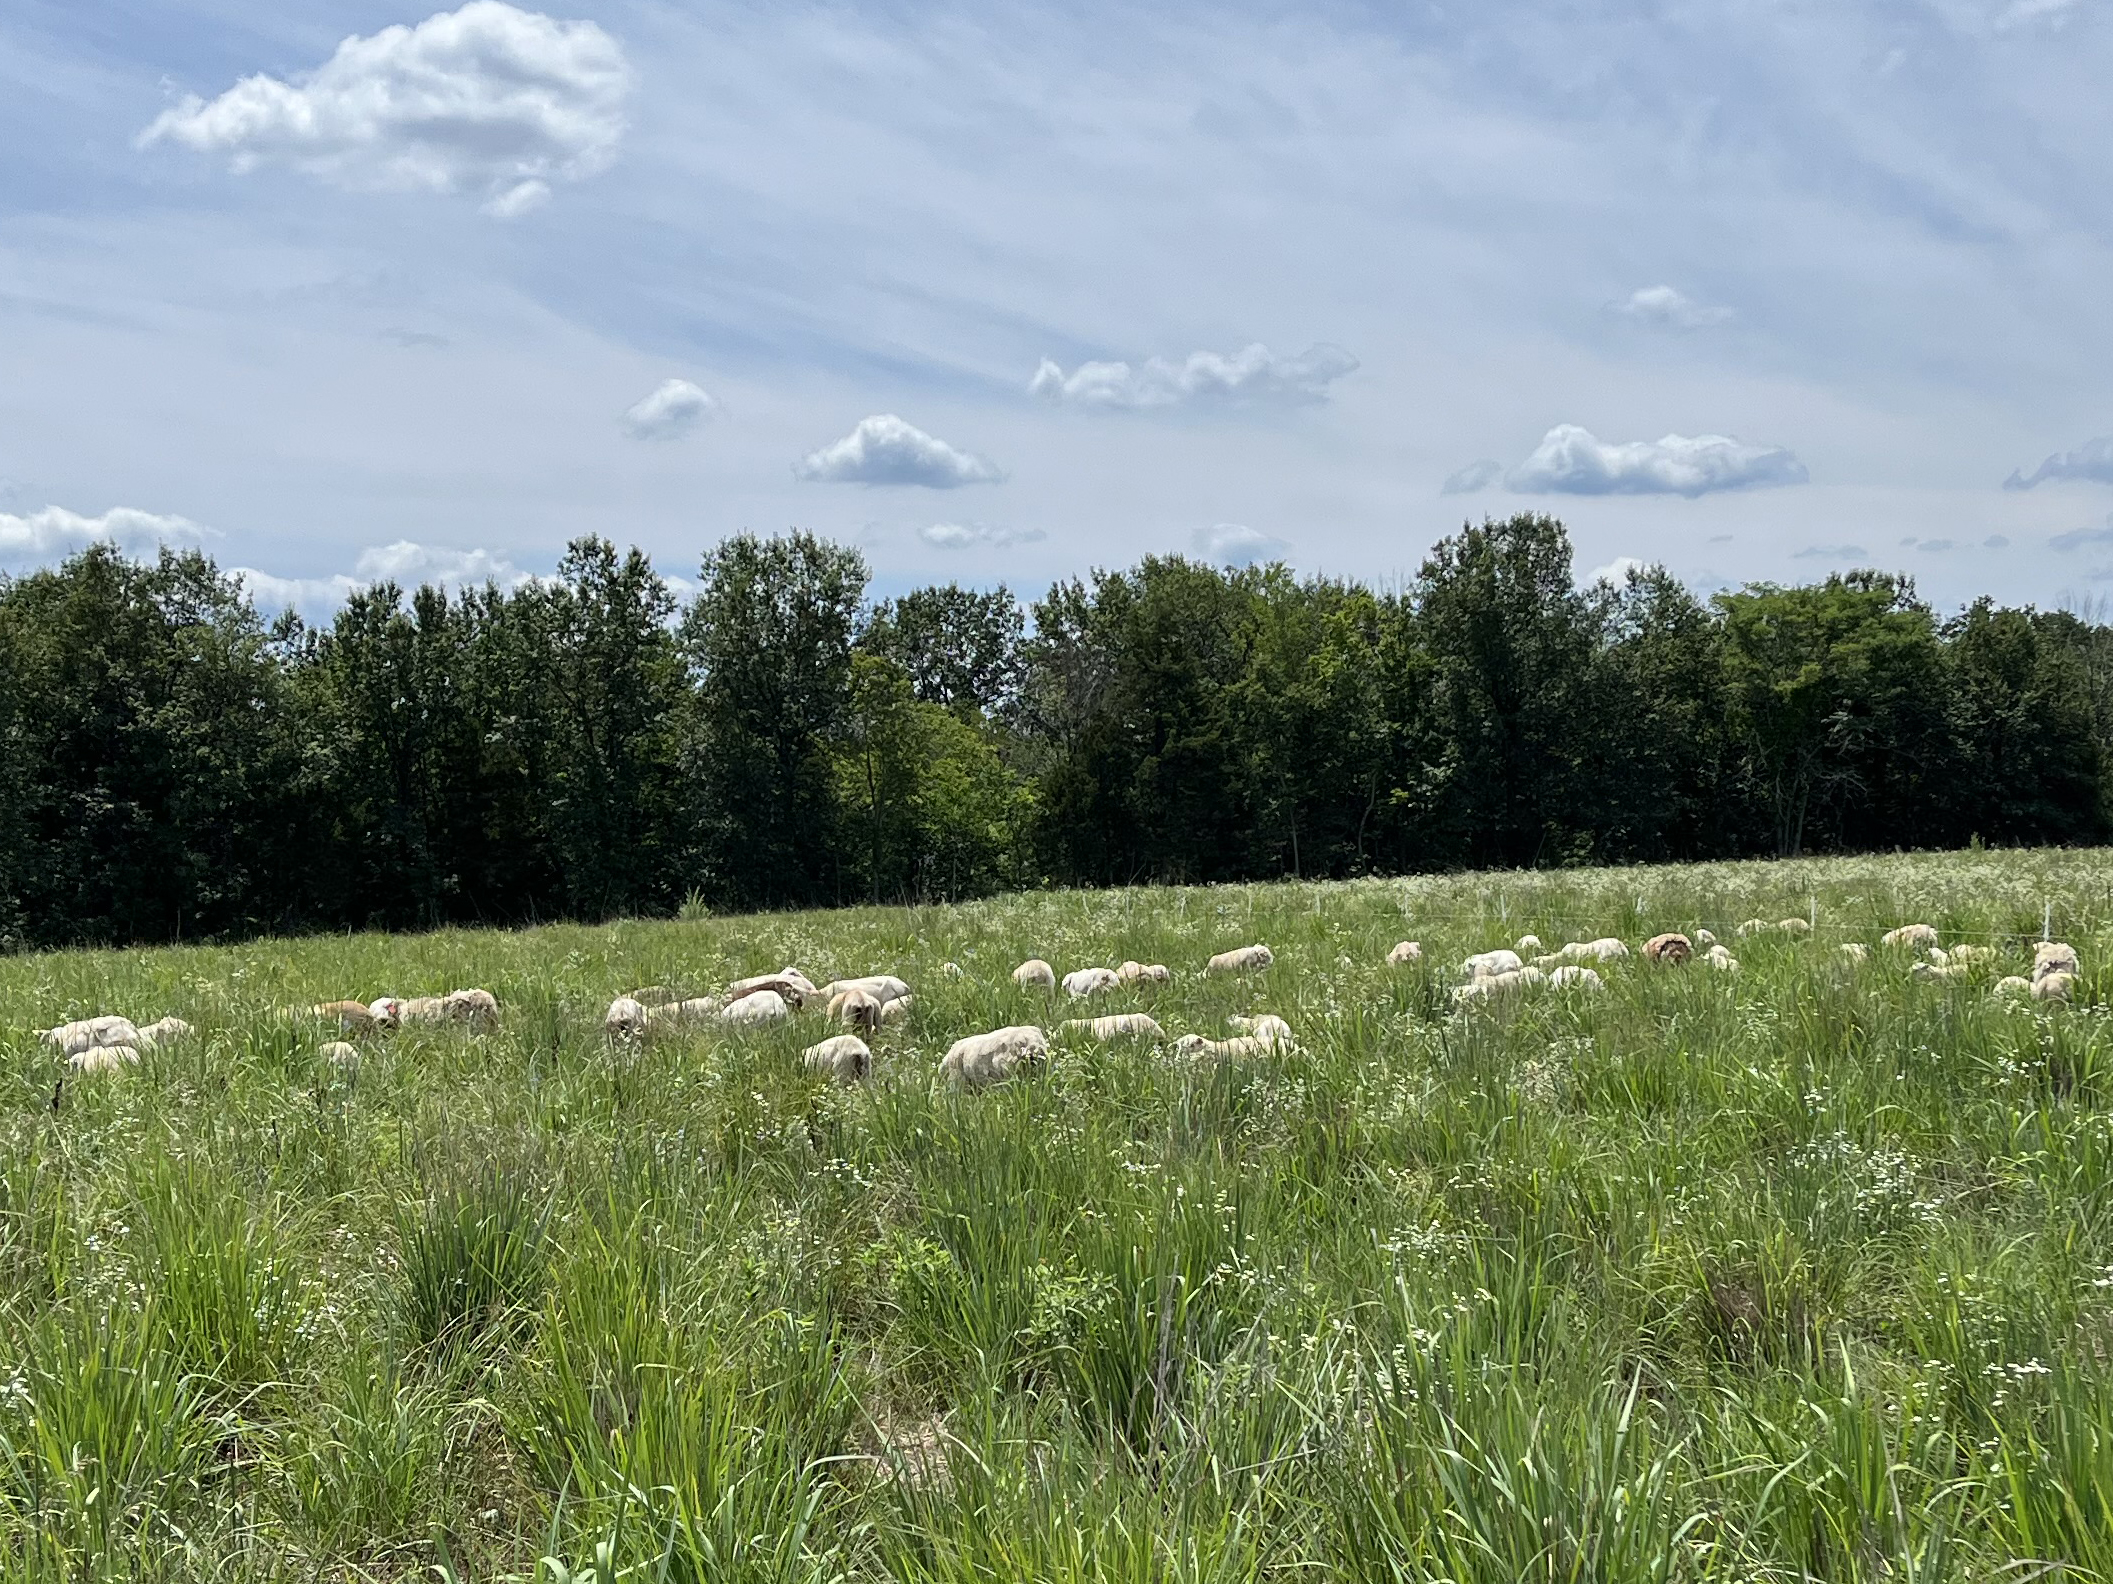 Katahdin sheep grazing Indiangrass, big bluestem, little bluestem mix during D3 drought in Truxton, Missouri. (Photo by Rusty Lee.)